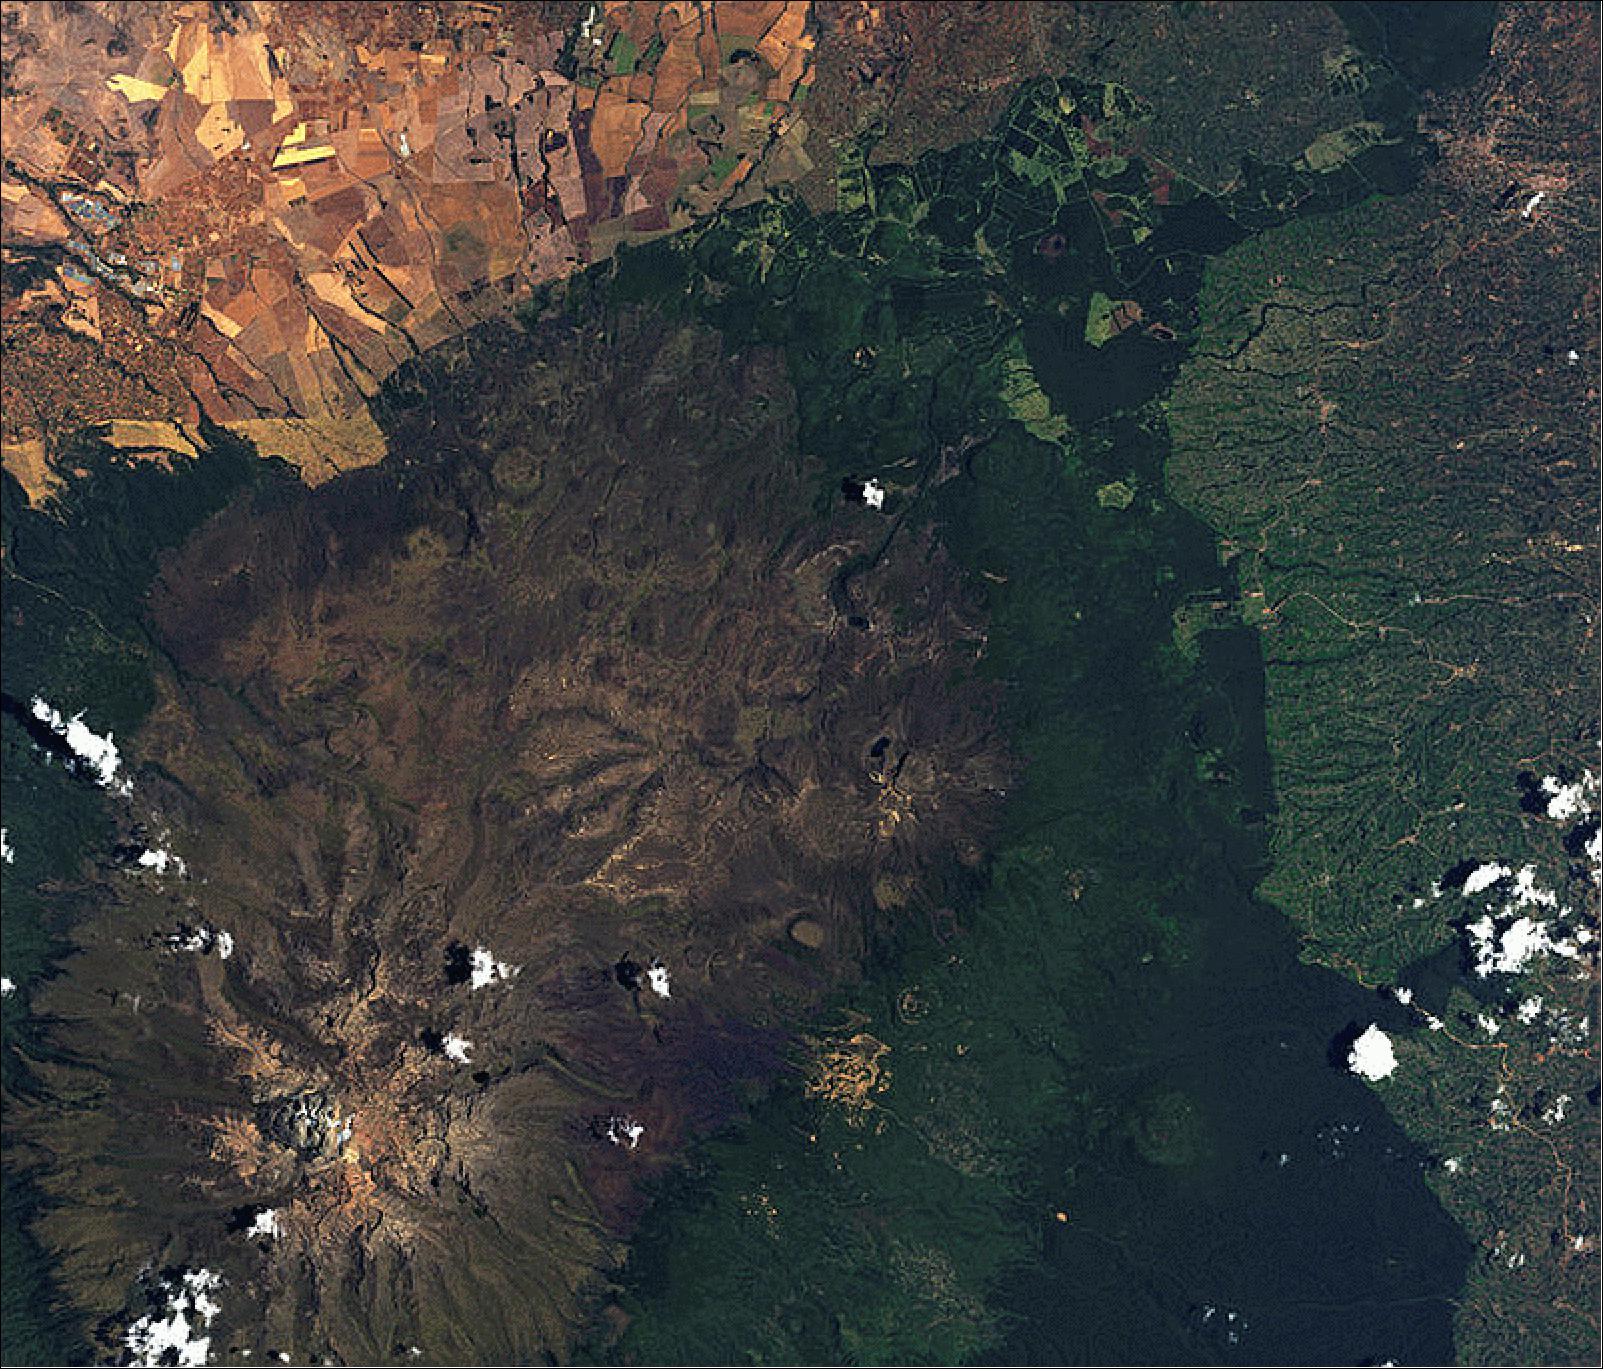 Figure 17: Mount Kenya, acquired with the AVNIR-2 instrument of ALOS on February 25, 2011 (image credit: JAXA, ESA)